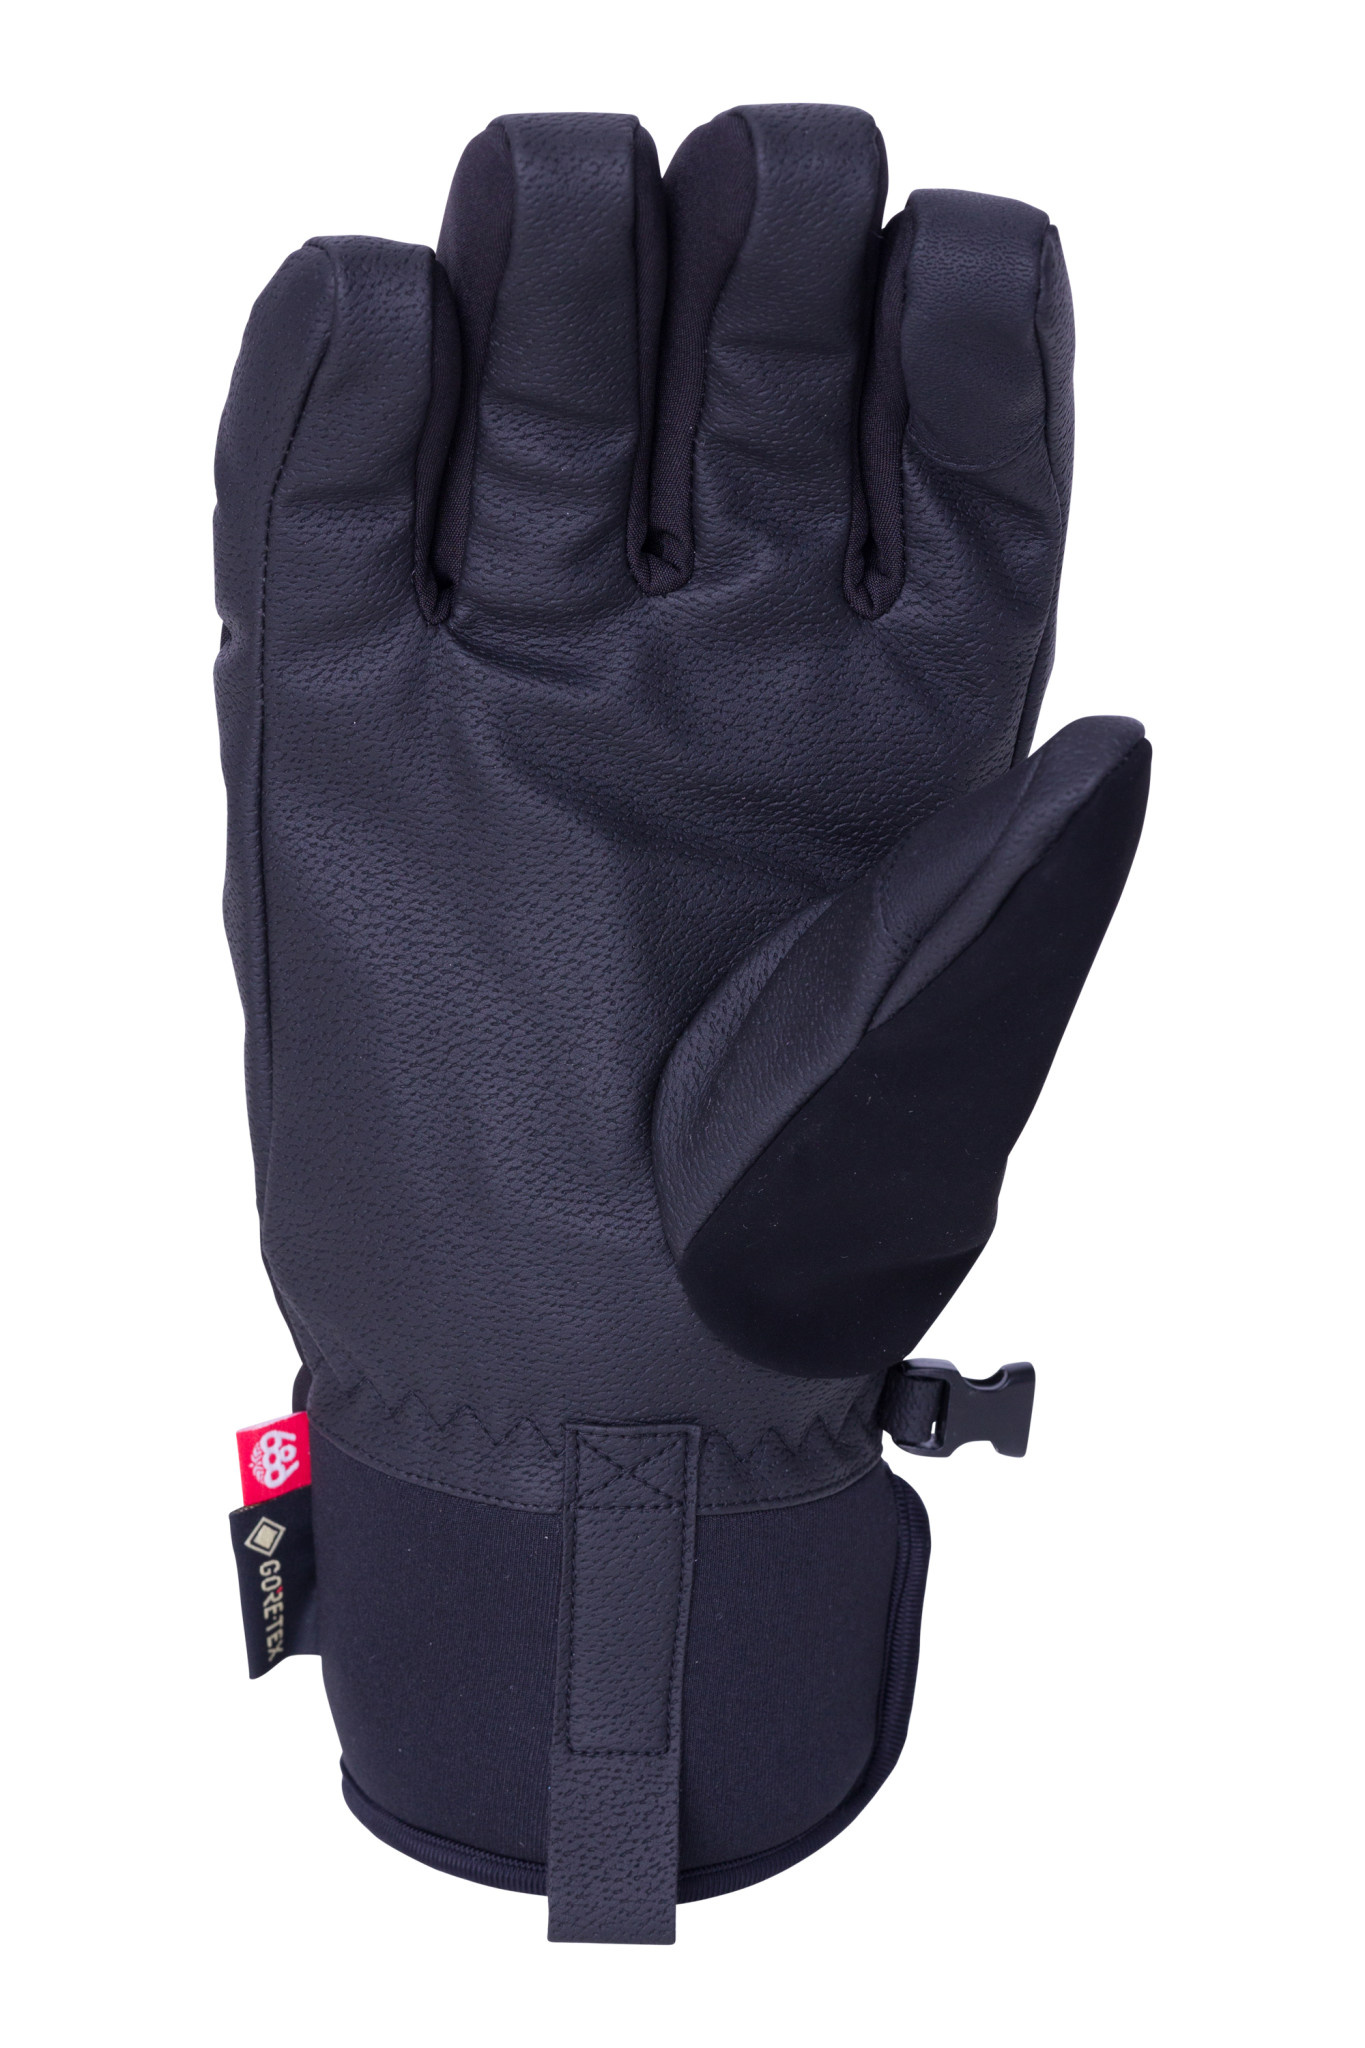 686 686 M's Gore-Tex Linear Under Cuff Glove